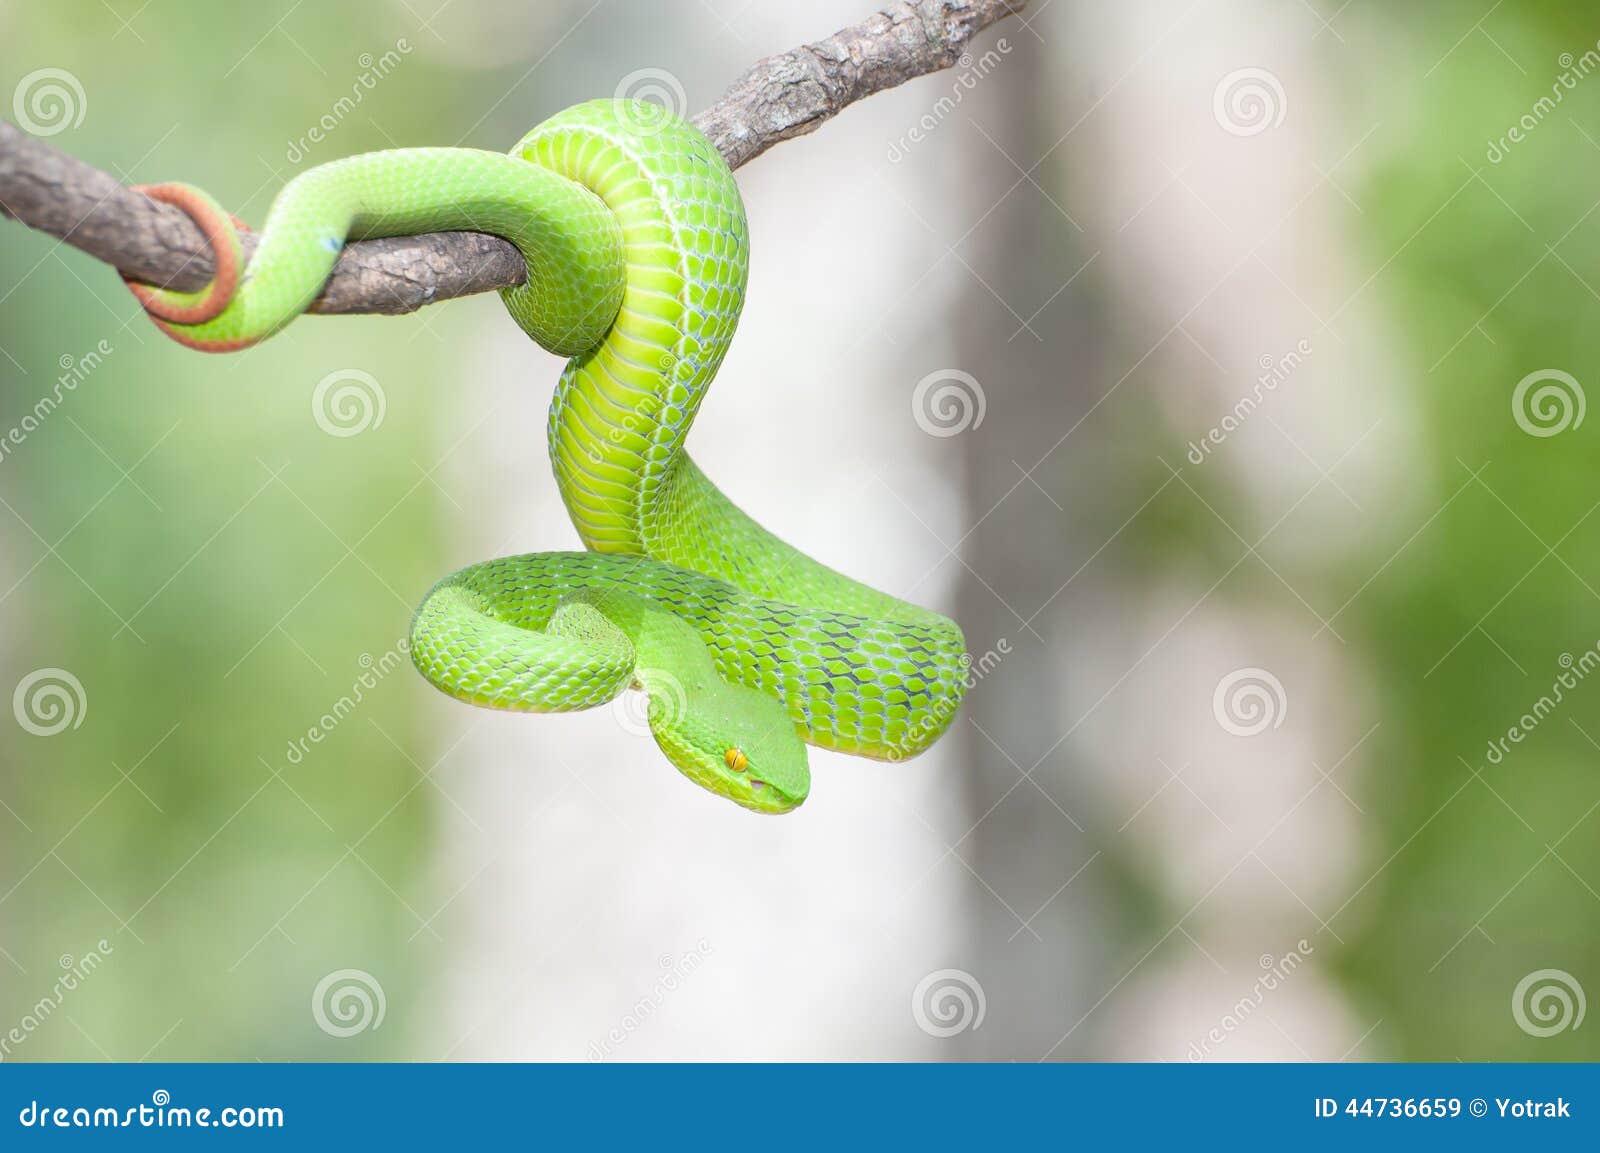 ekiiwhagahmg snakes (snakes green)